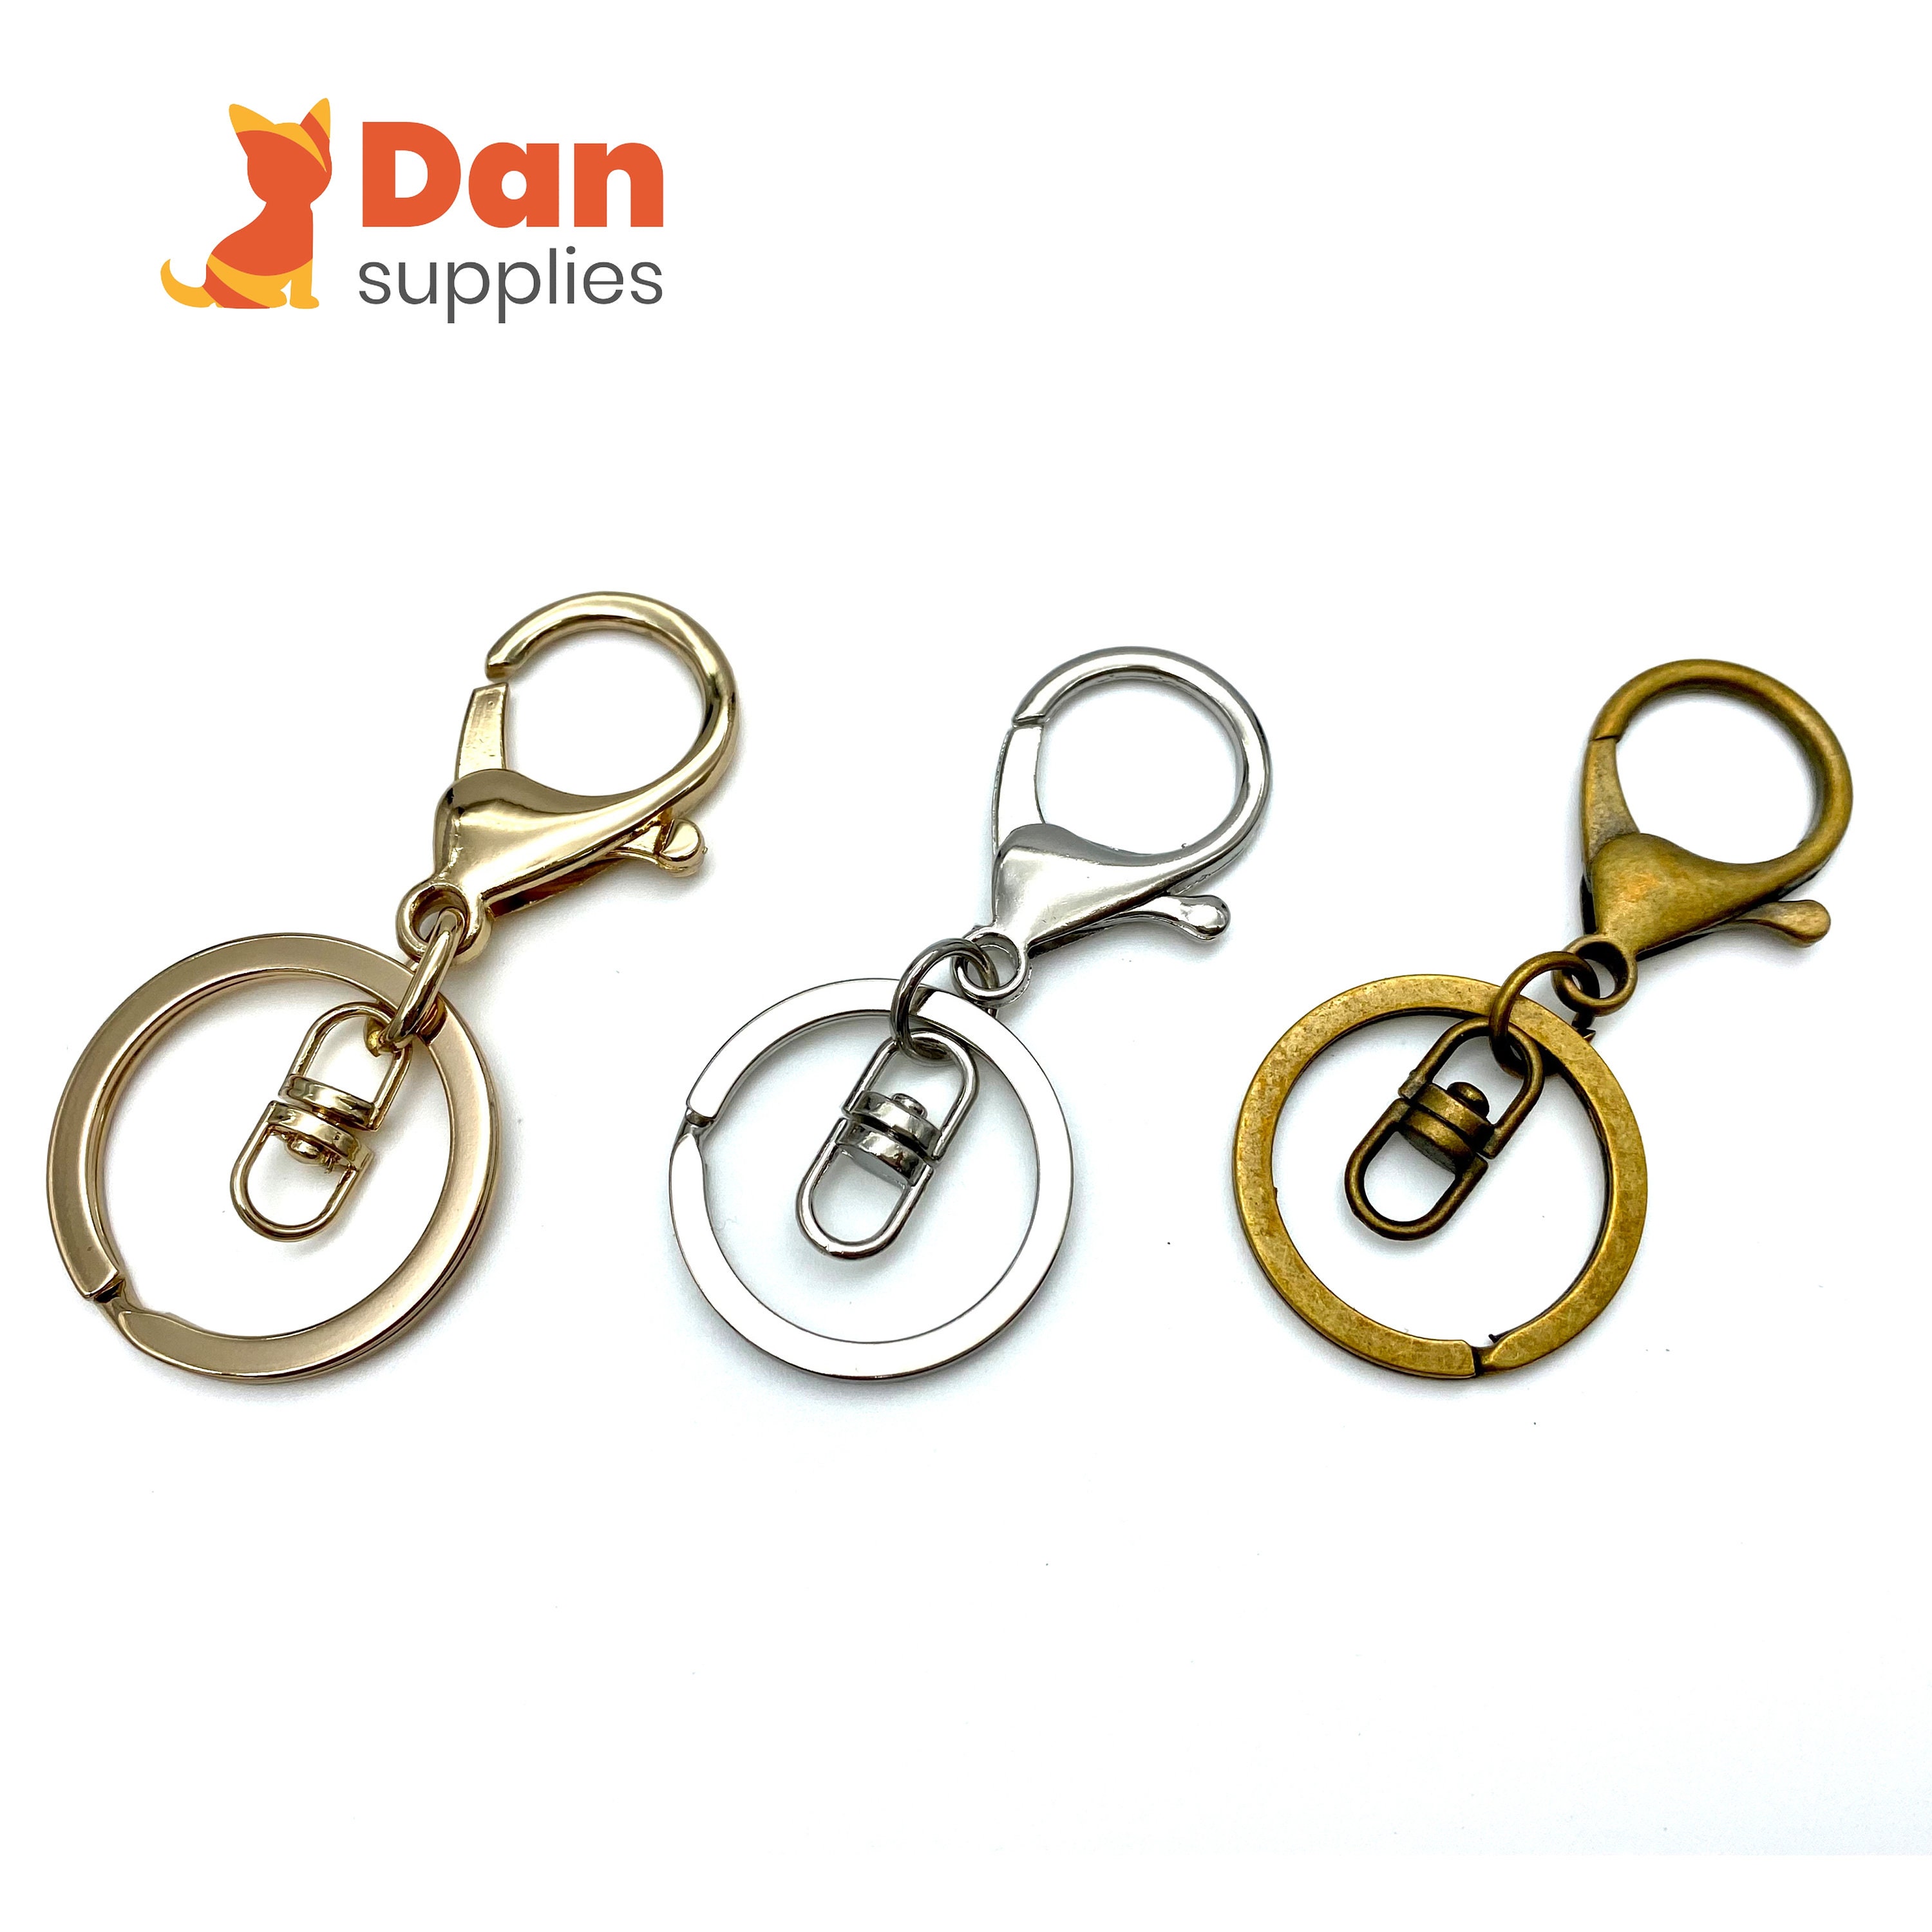 Keychain Ring Swivel Clasp (1pcs/5pcs)Macrame DIY Handcraft | Decor |  Handmade Bag & Accessories 